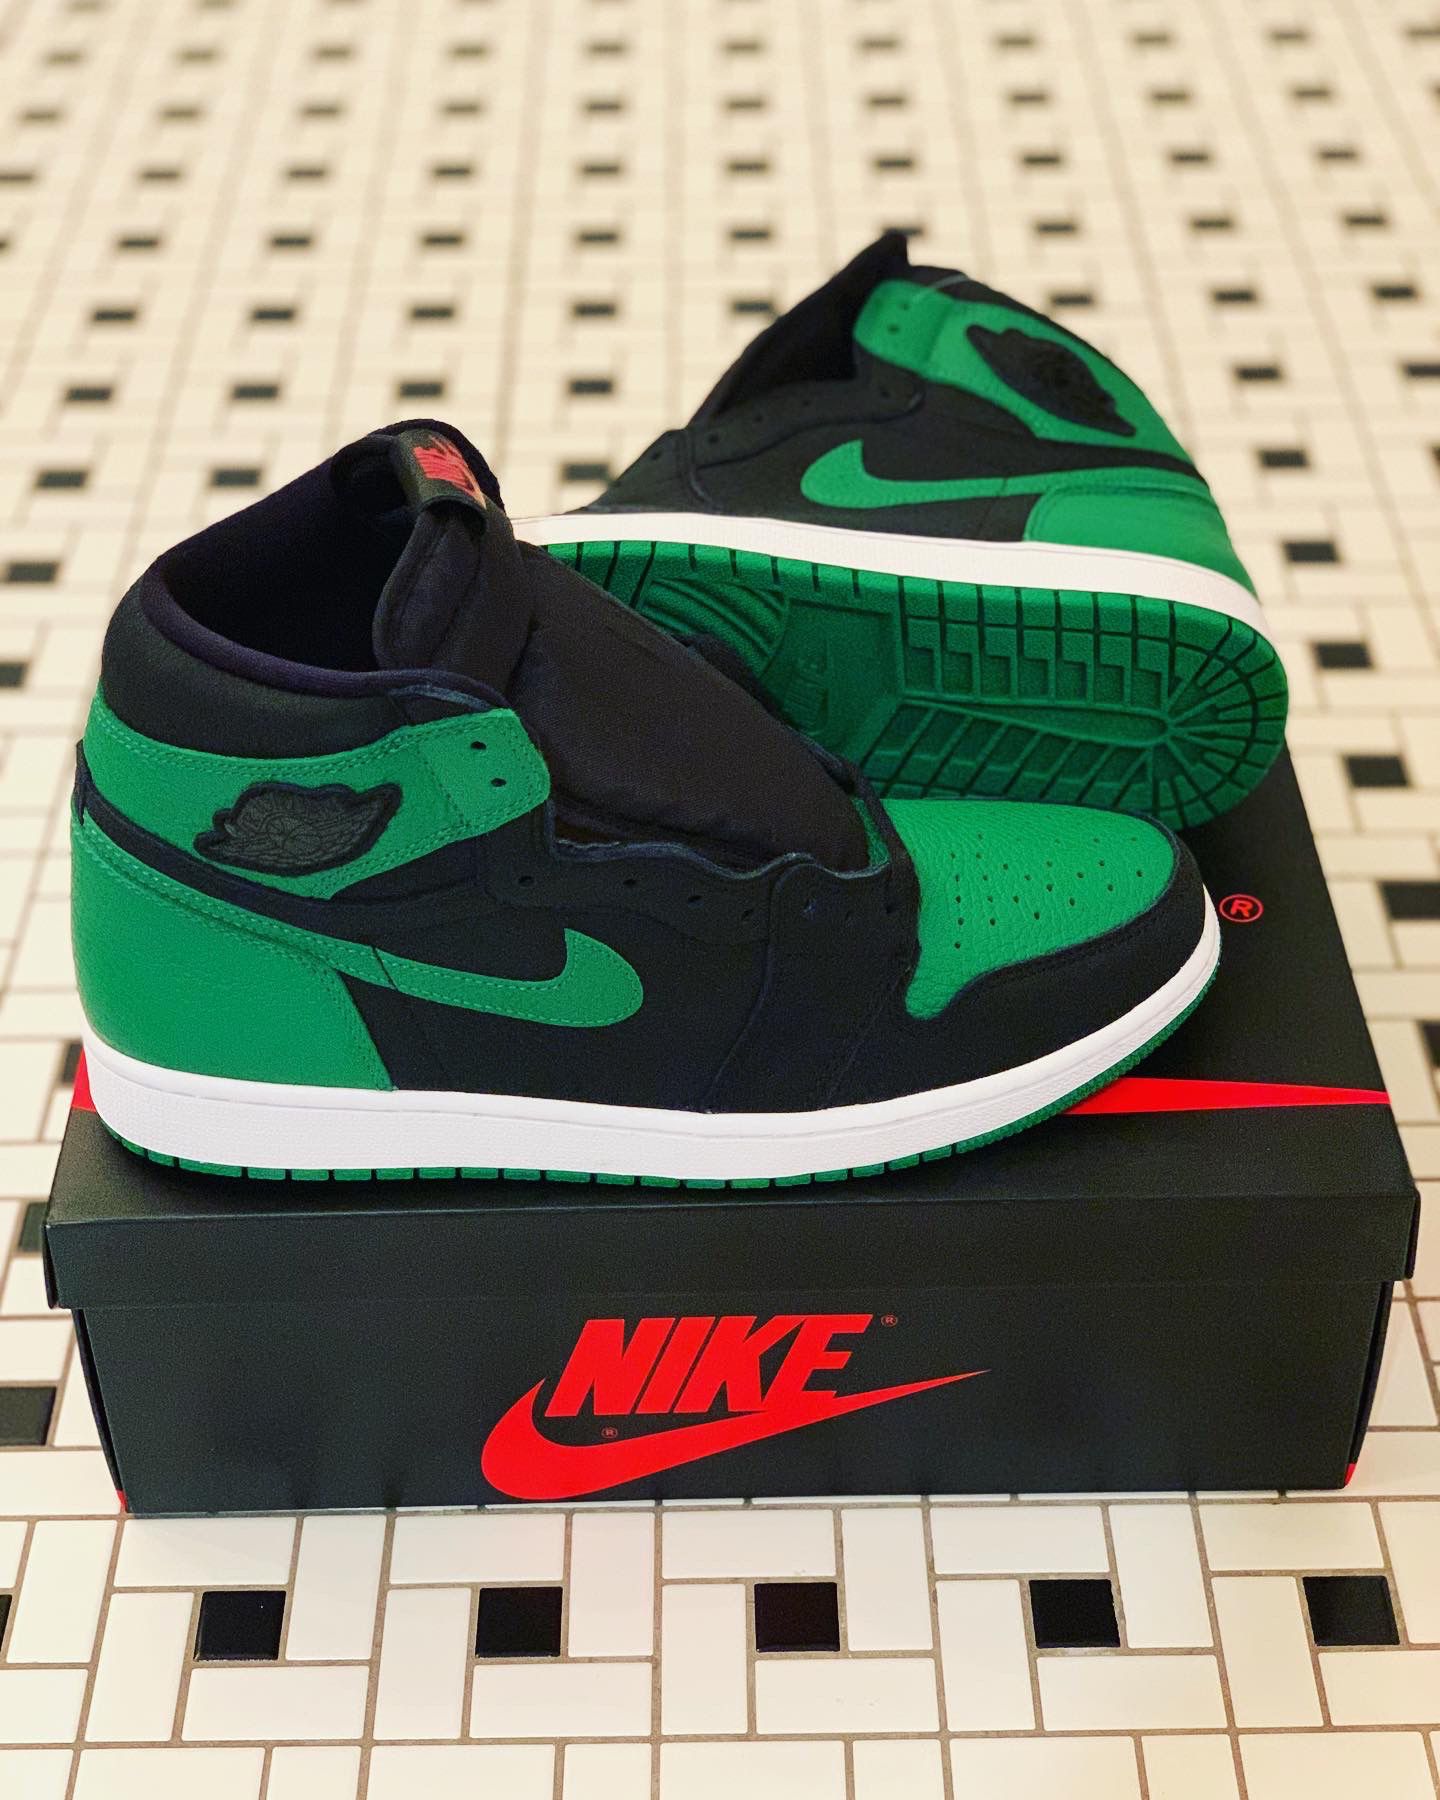 Nike Air Jordan 1 Retro High Pine Green Size 11 Brand New in Box